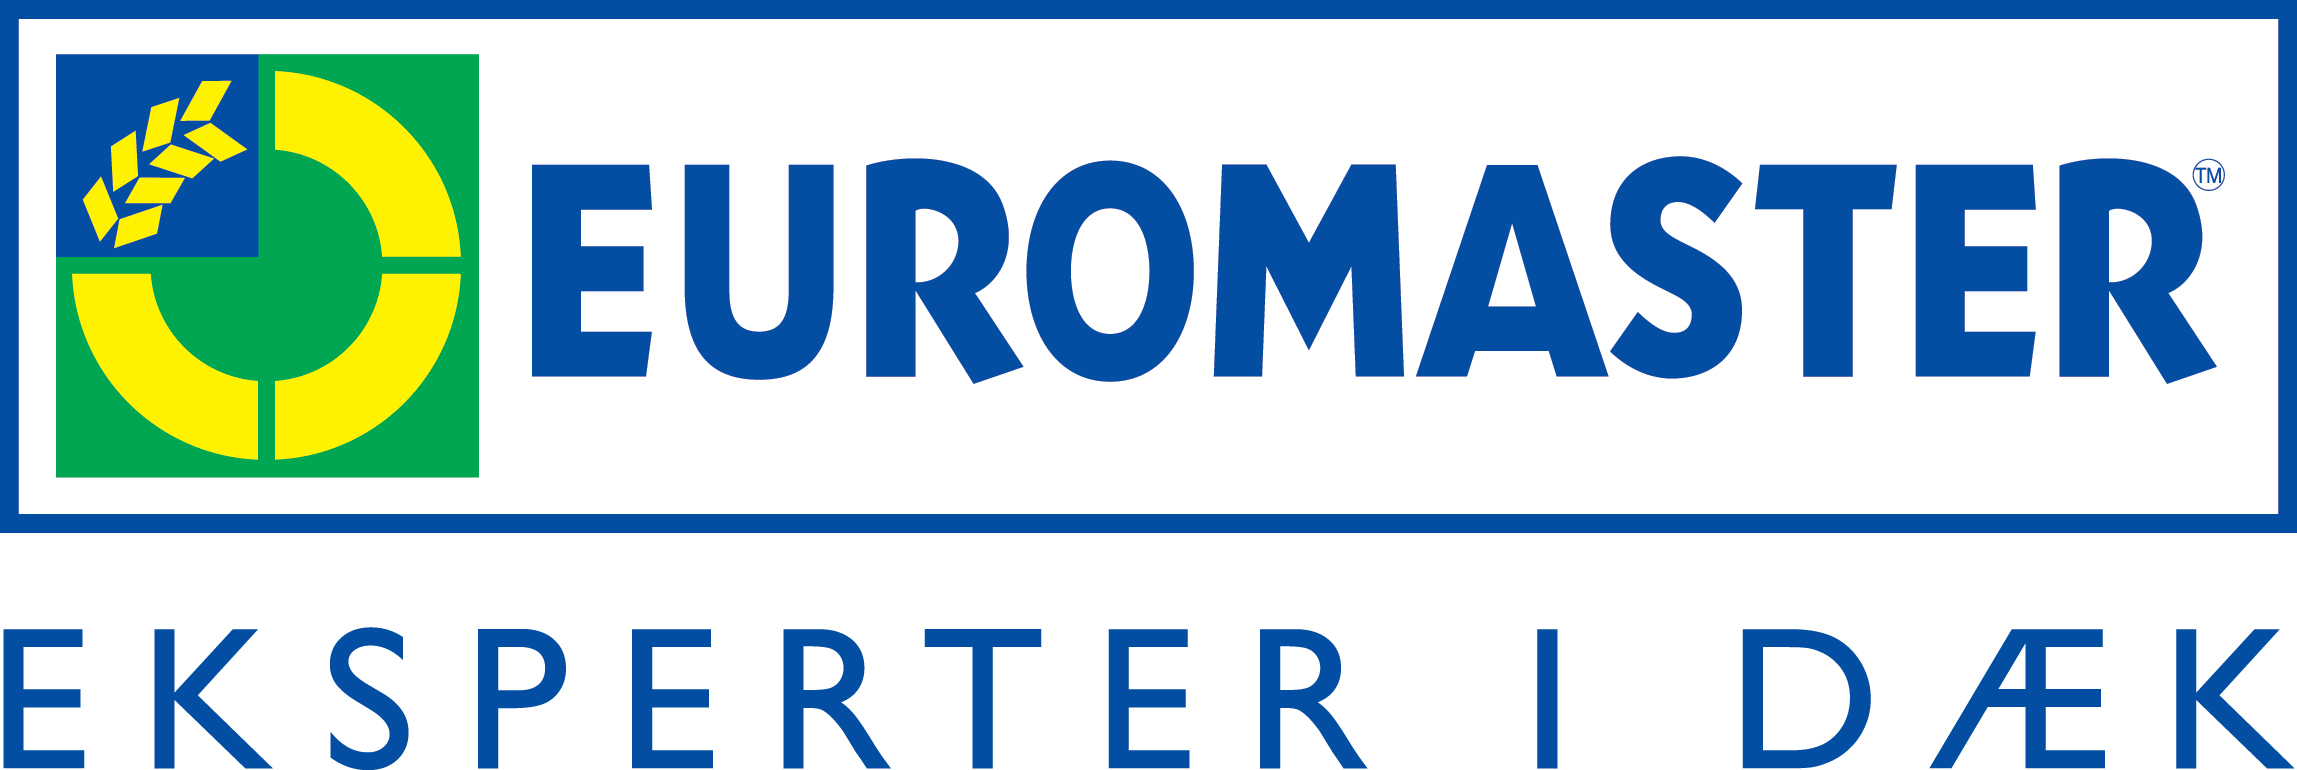 Euromaster Næstved gammel logo